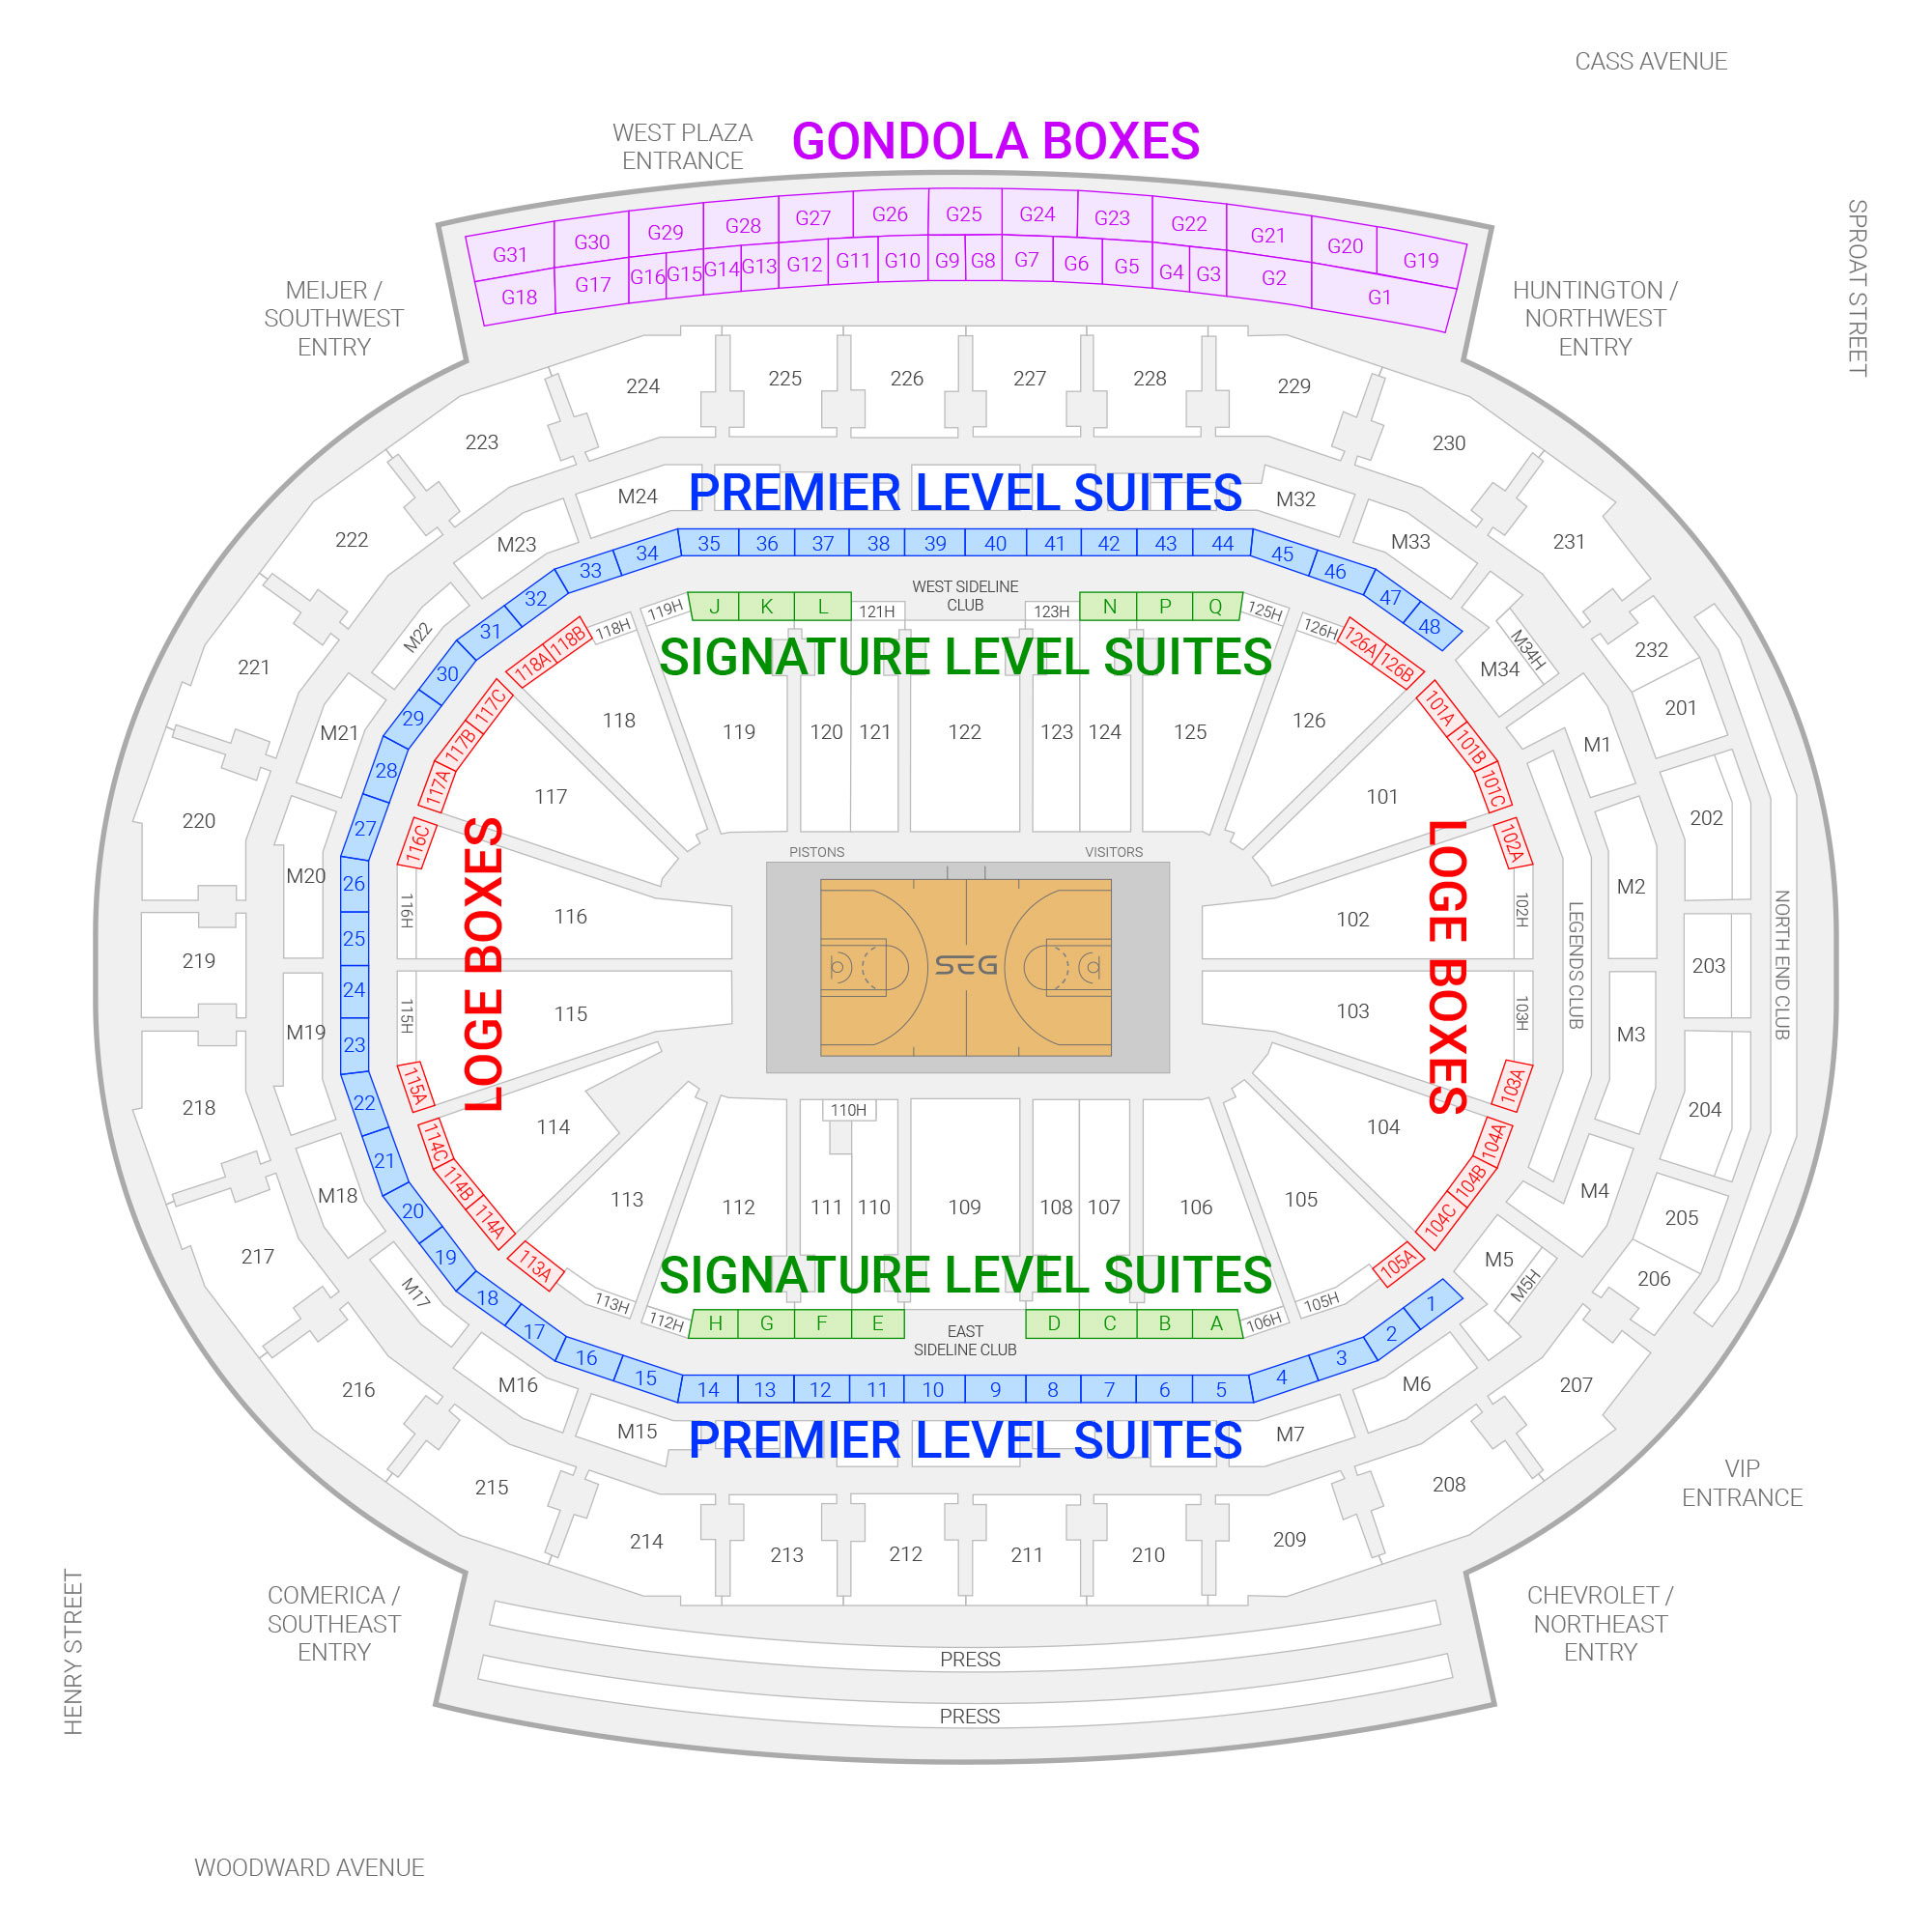 NBA Detroit Pistons Reveal Plans for Bar Serving Courtside Ticket